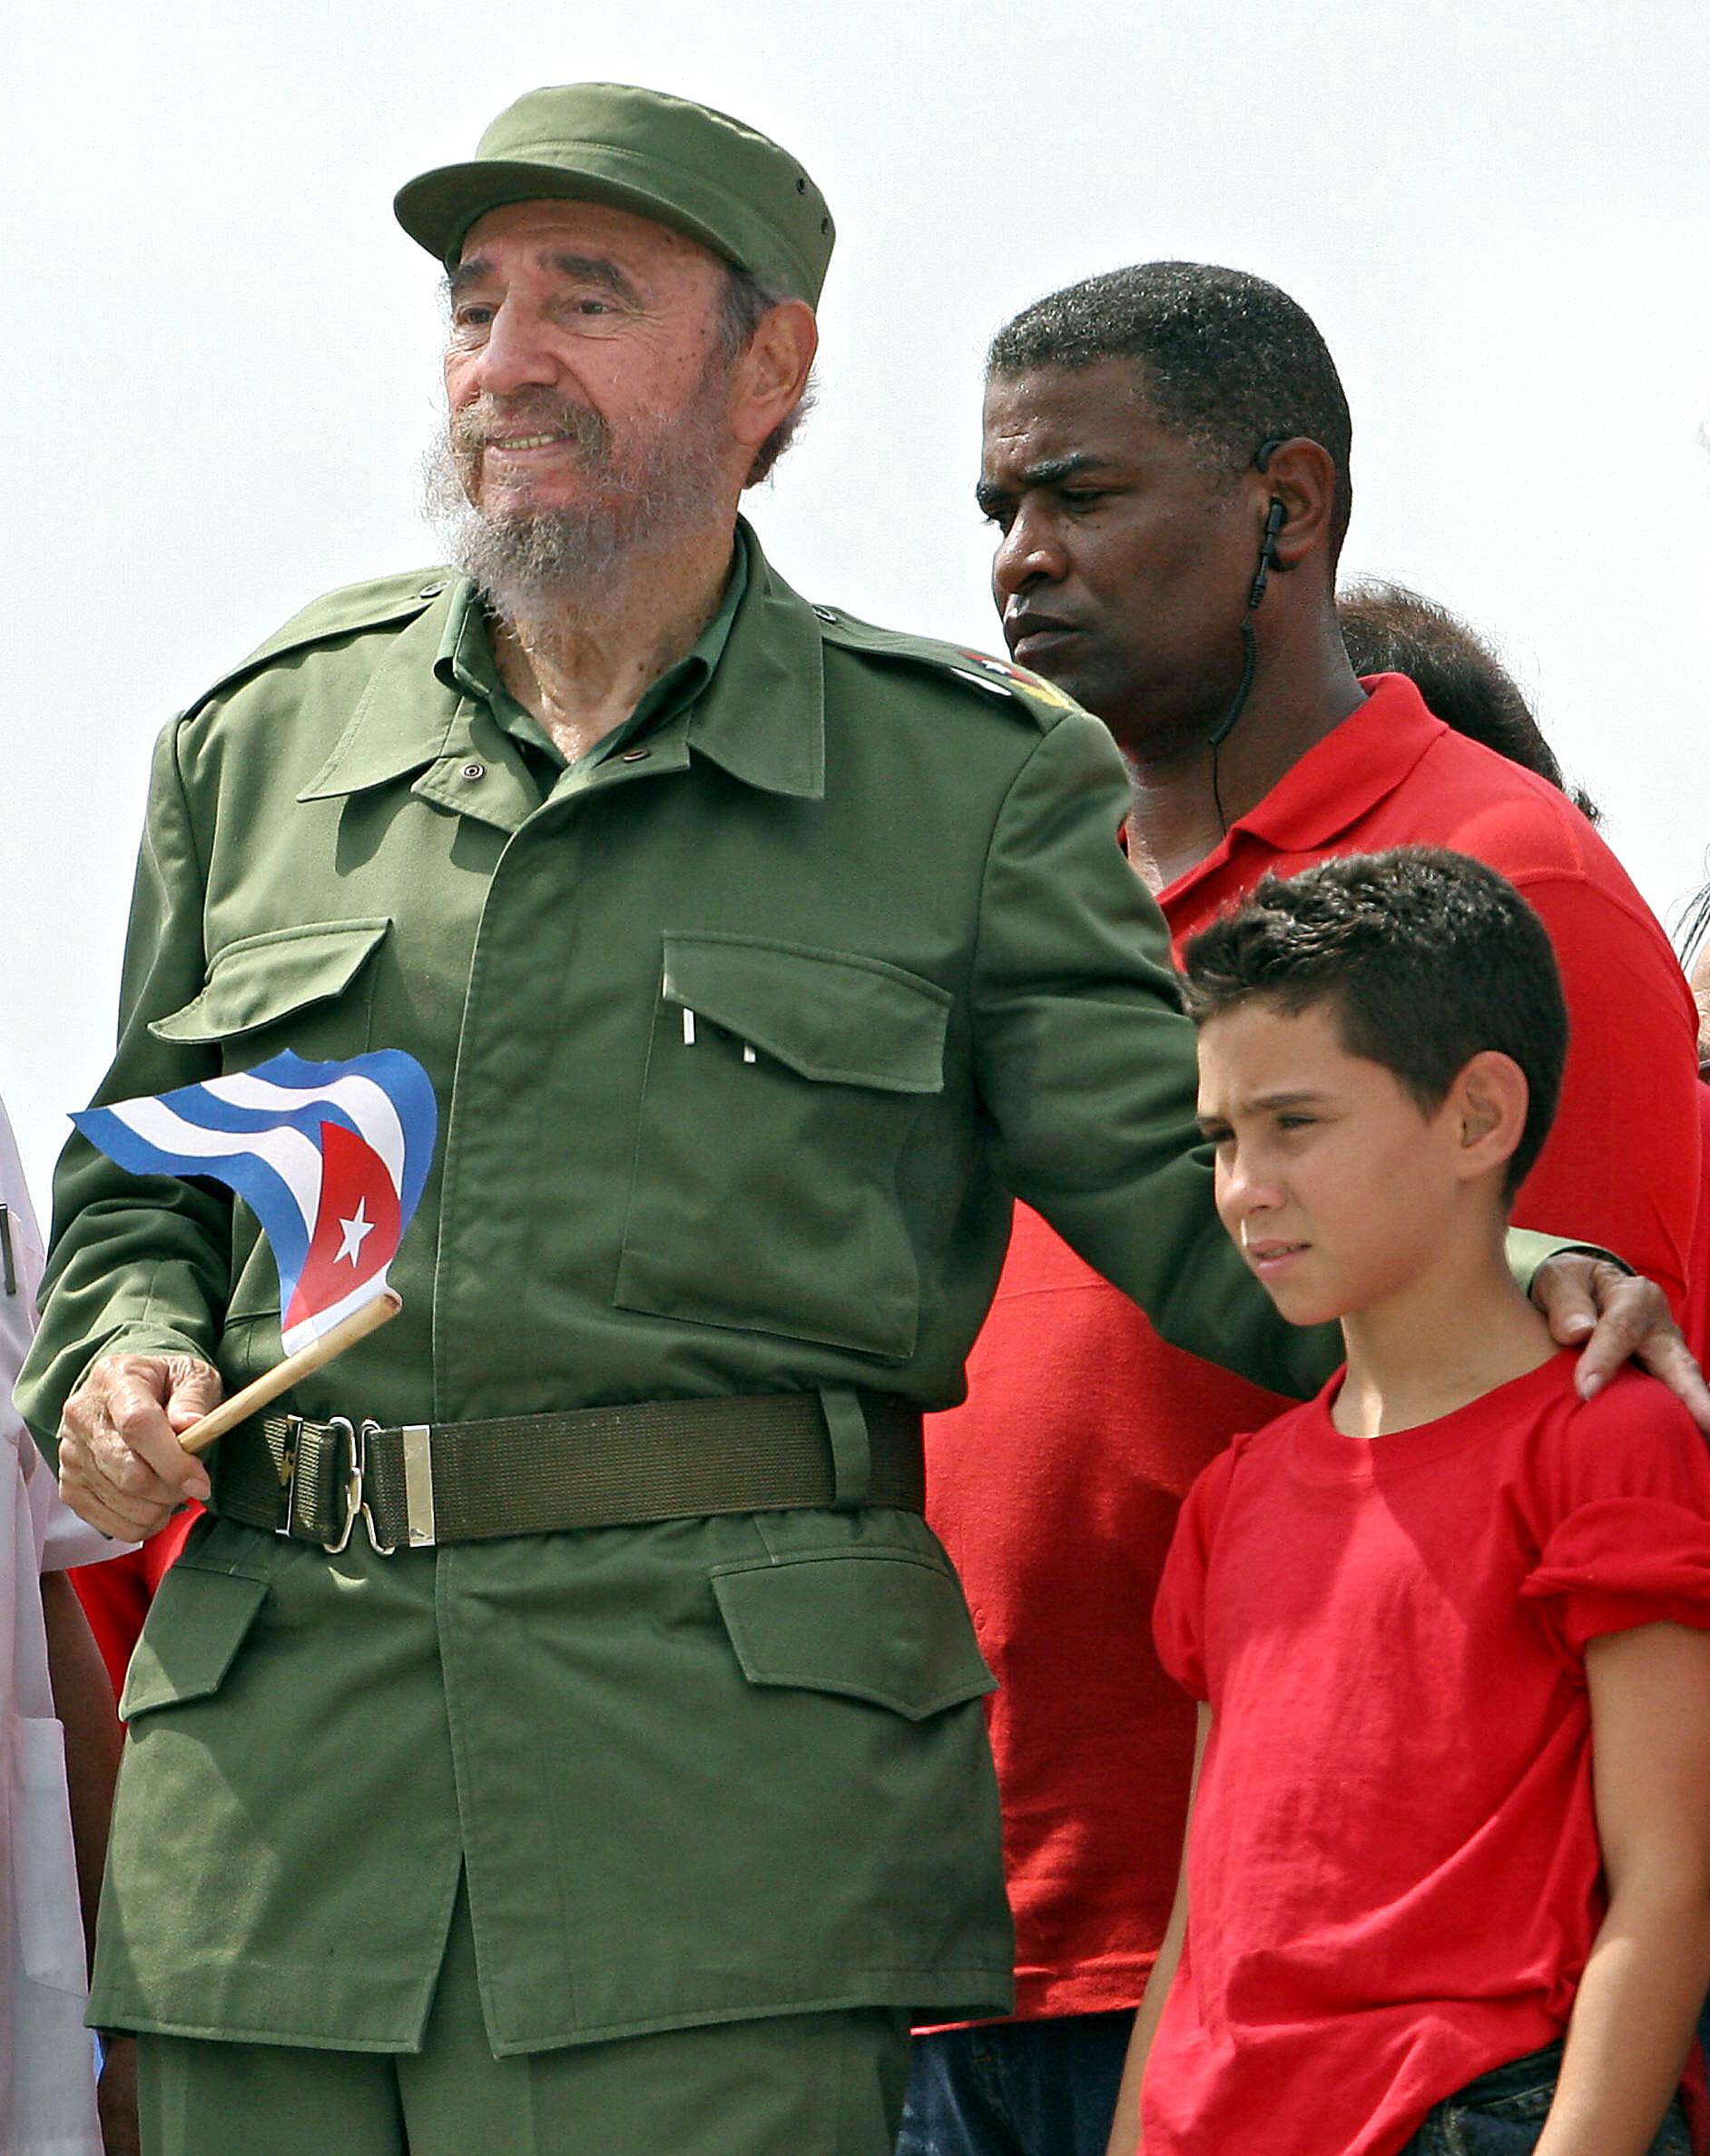 Cuban President Fidel Castro (L) poses with shipwreck survivor Elian Gonzalez, after presiding over a massive May Day demonstration at Havana's Plaza de la Revolucion, 01 May 2005. (ADALBERTO ROQUE/AFP/Getty Images)